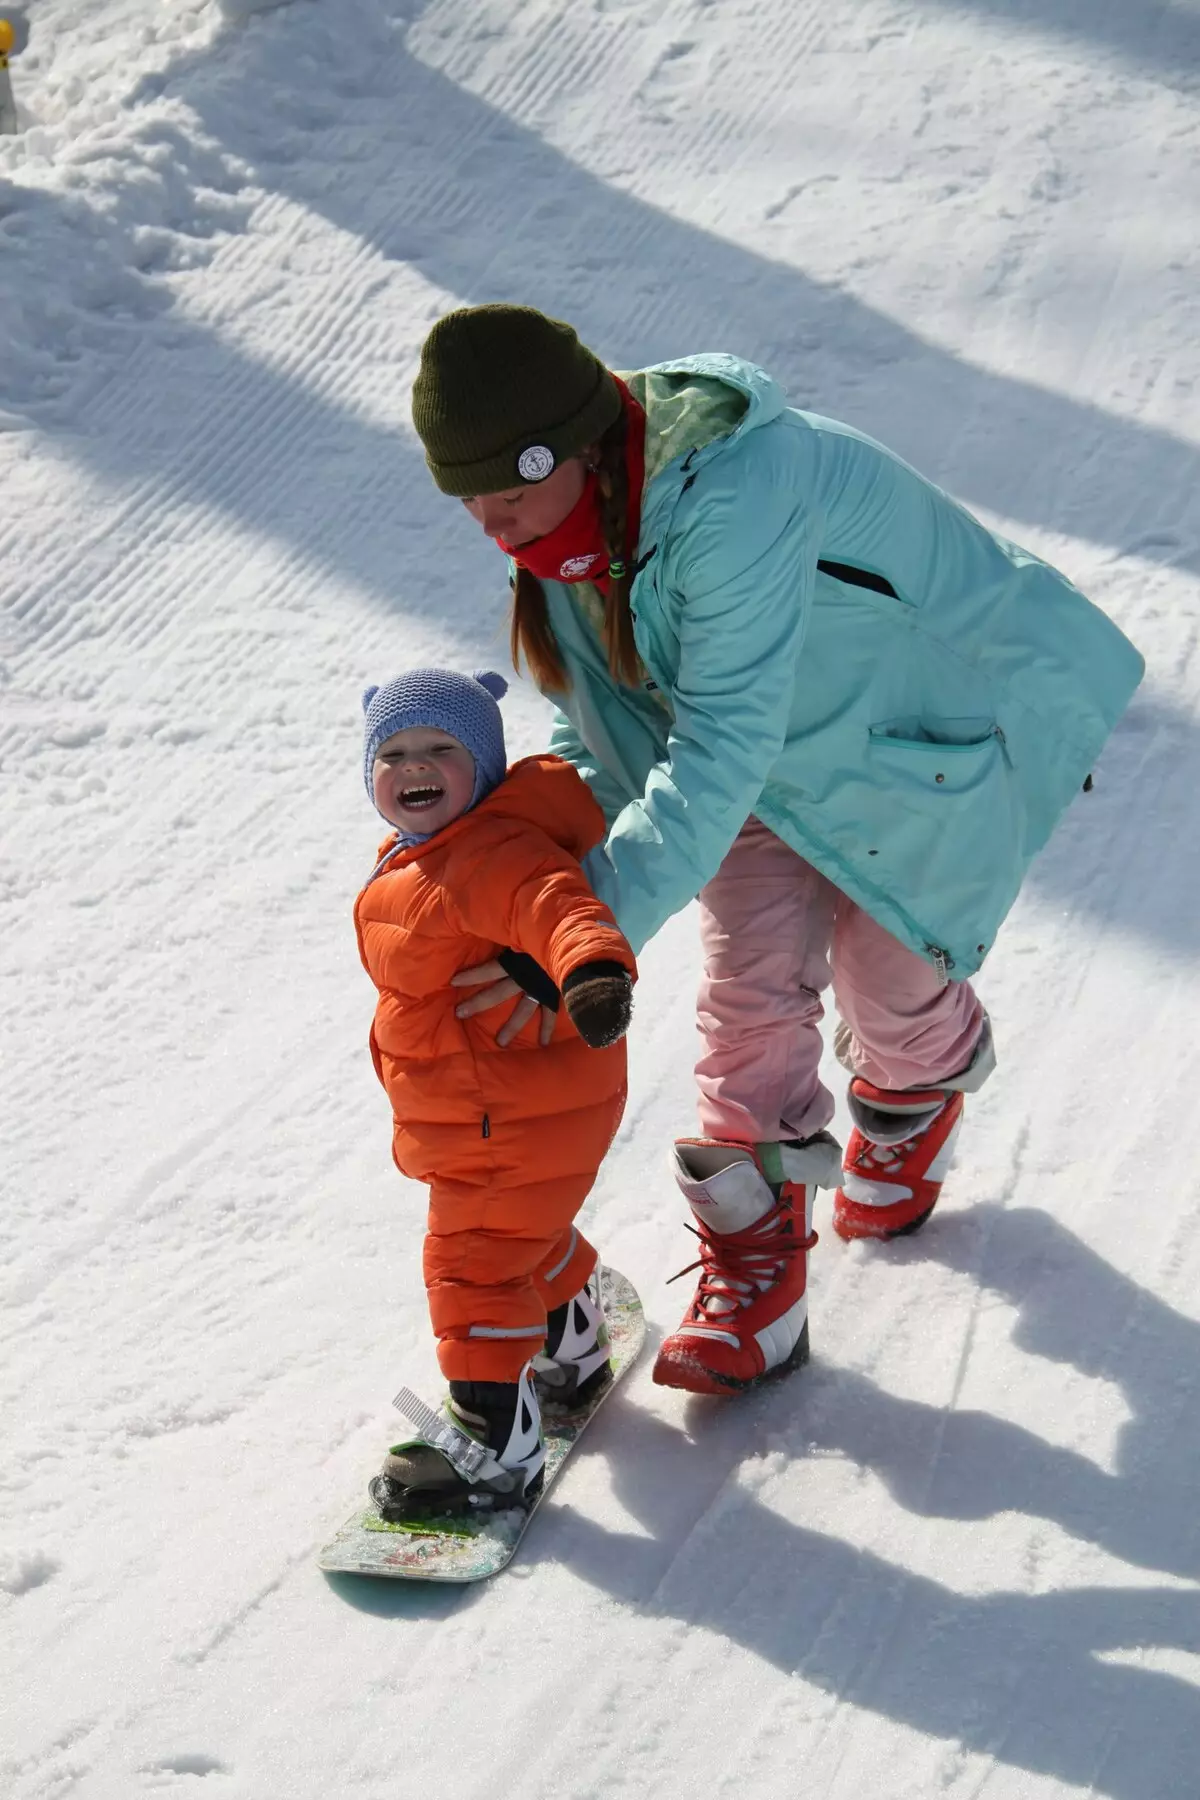 Botas de Snowboard (119 fotos): Como escolher botas de snowboard para mulheres, modelo Nike, Adidas e outras marcas populares 15127_31